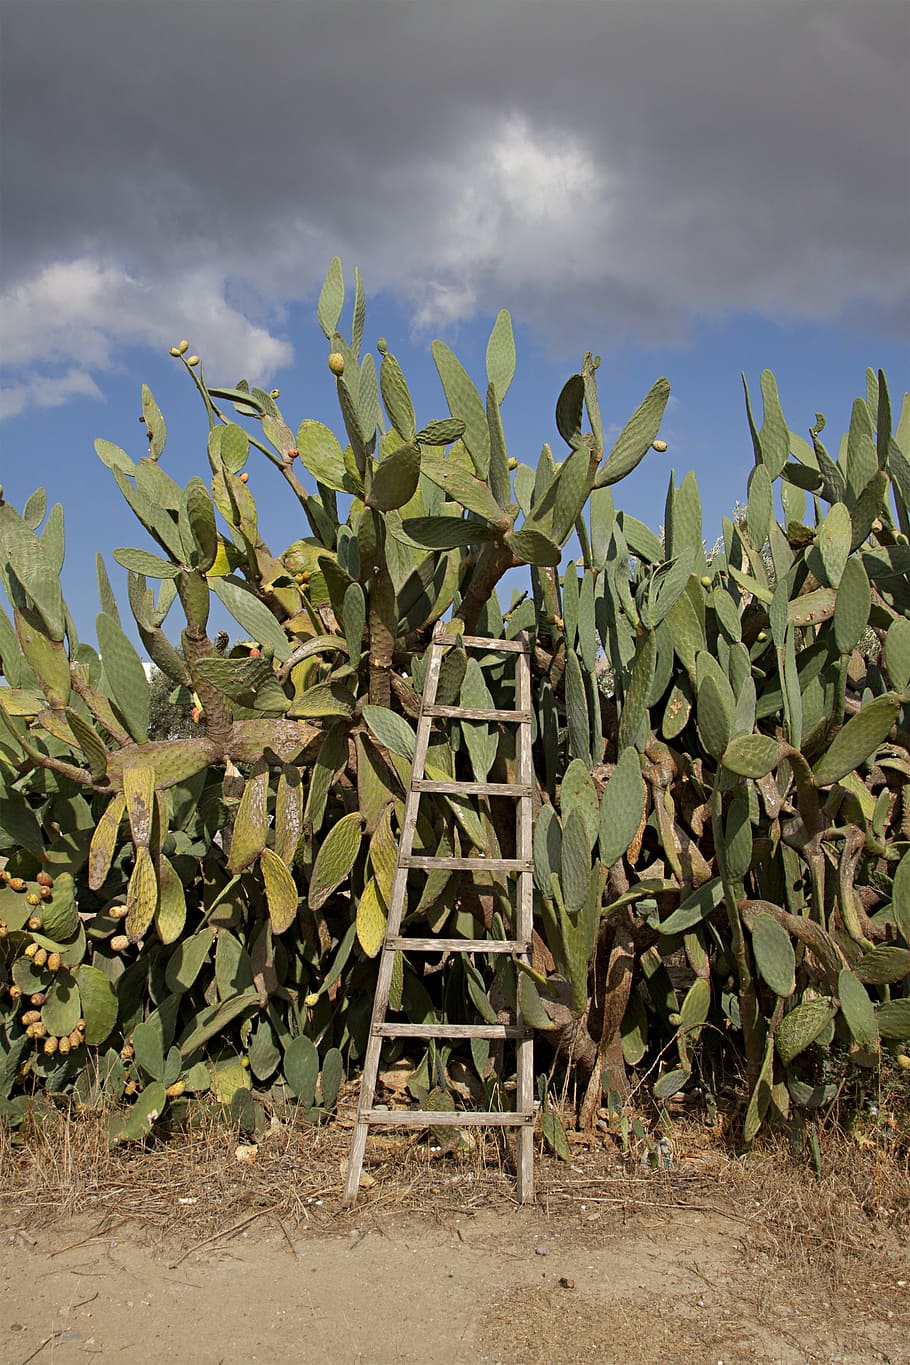 cactus, prickly pear, head, warm, heiss, landscape, cyprus, heat, dry, growth